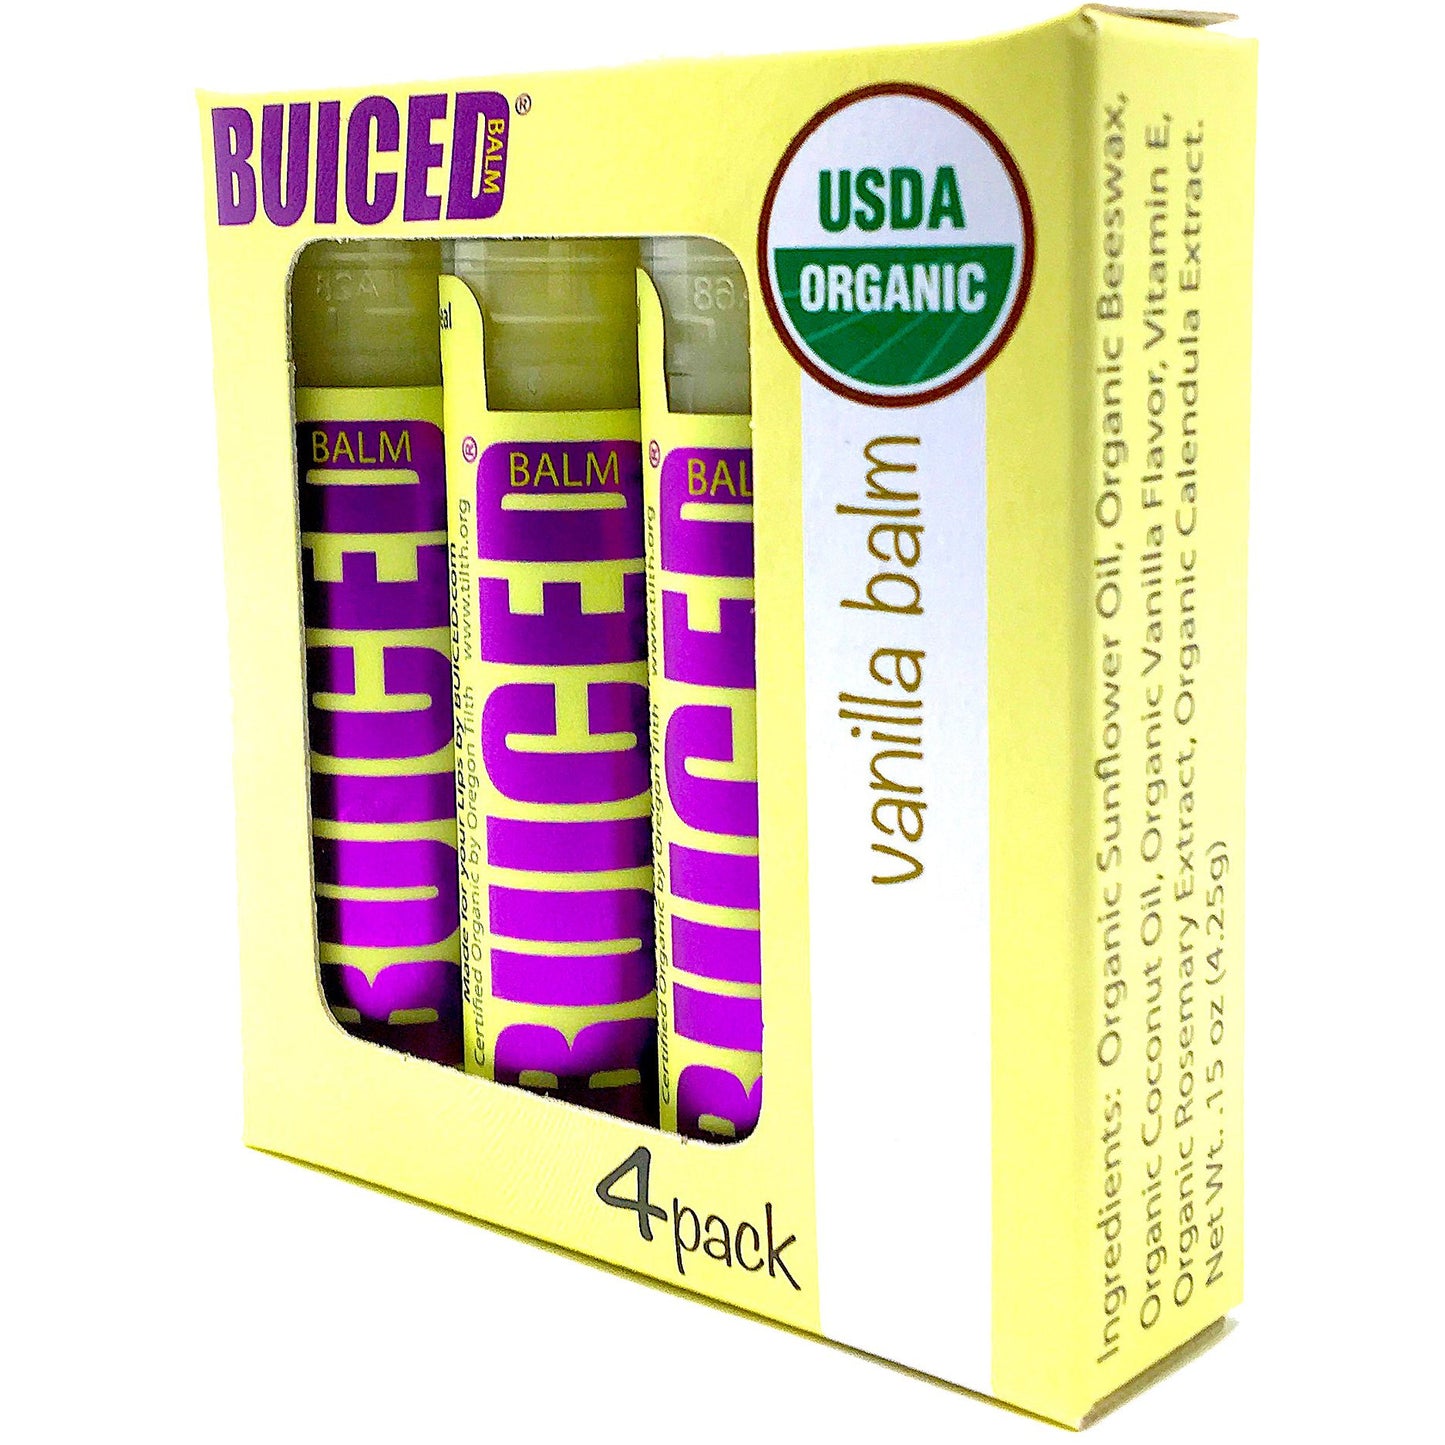 USDA Certified Organic - Vanilla 4pack - Buiced Liquid Multivitamin | Gluten Free Vitamins | GMO Free Vitamins | Made in USA Vitamins | Best Multivitamin 